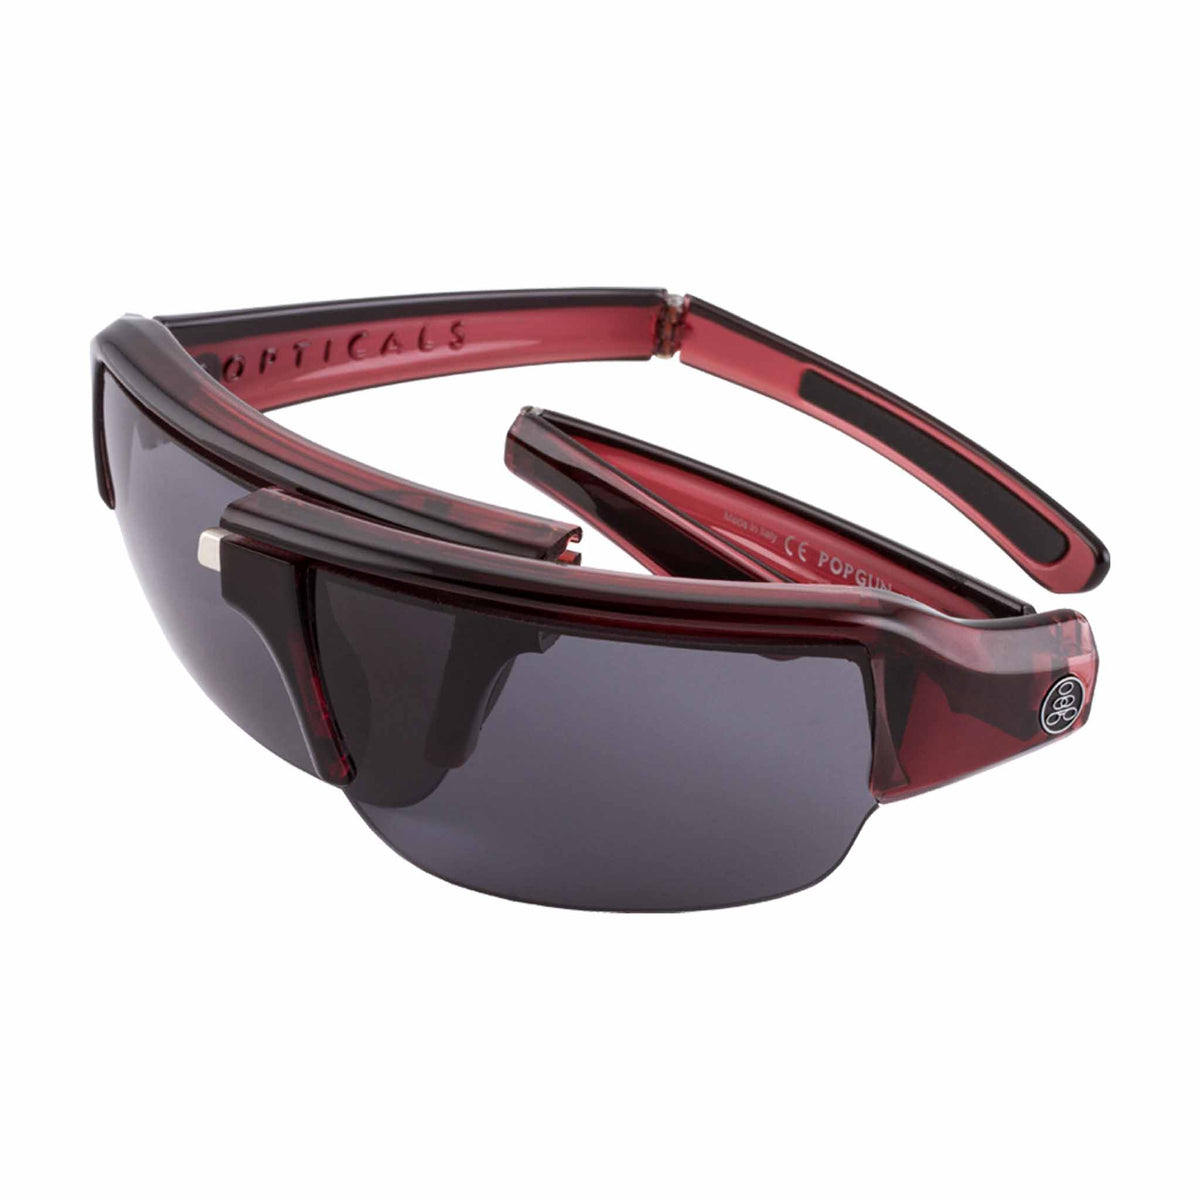 Popticals, Premium Compact Sunglasses, PopGun, 020010-WXGP, Polarized Sunglasses, Gloss Wine Crystal Frame, Gray Lenses, Spider View